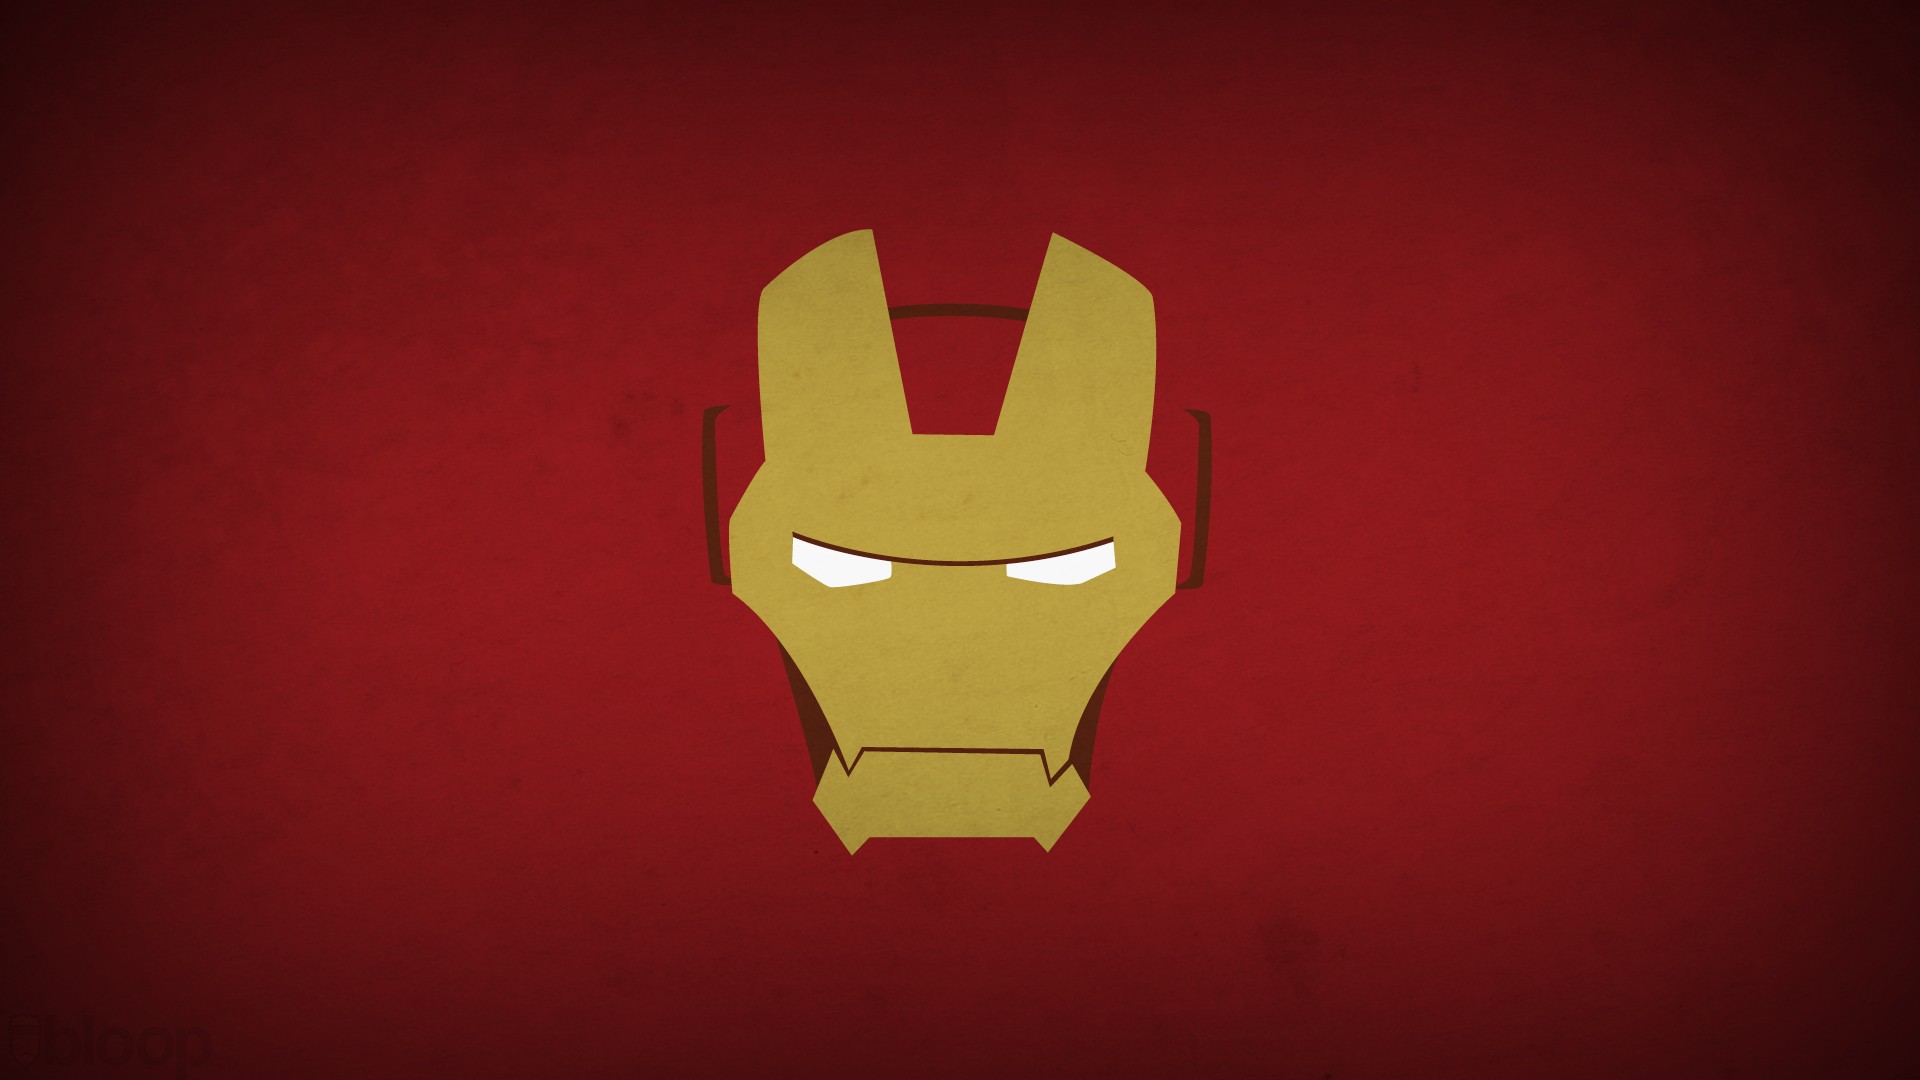 Wallpapers Minimalistic Marvel Iron Man Superheroes Comics Red .4 ...